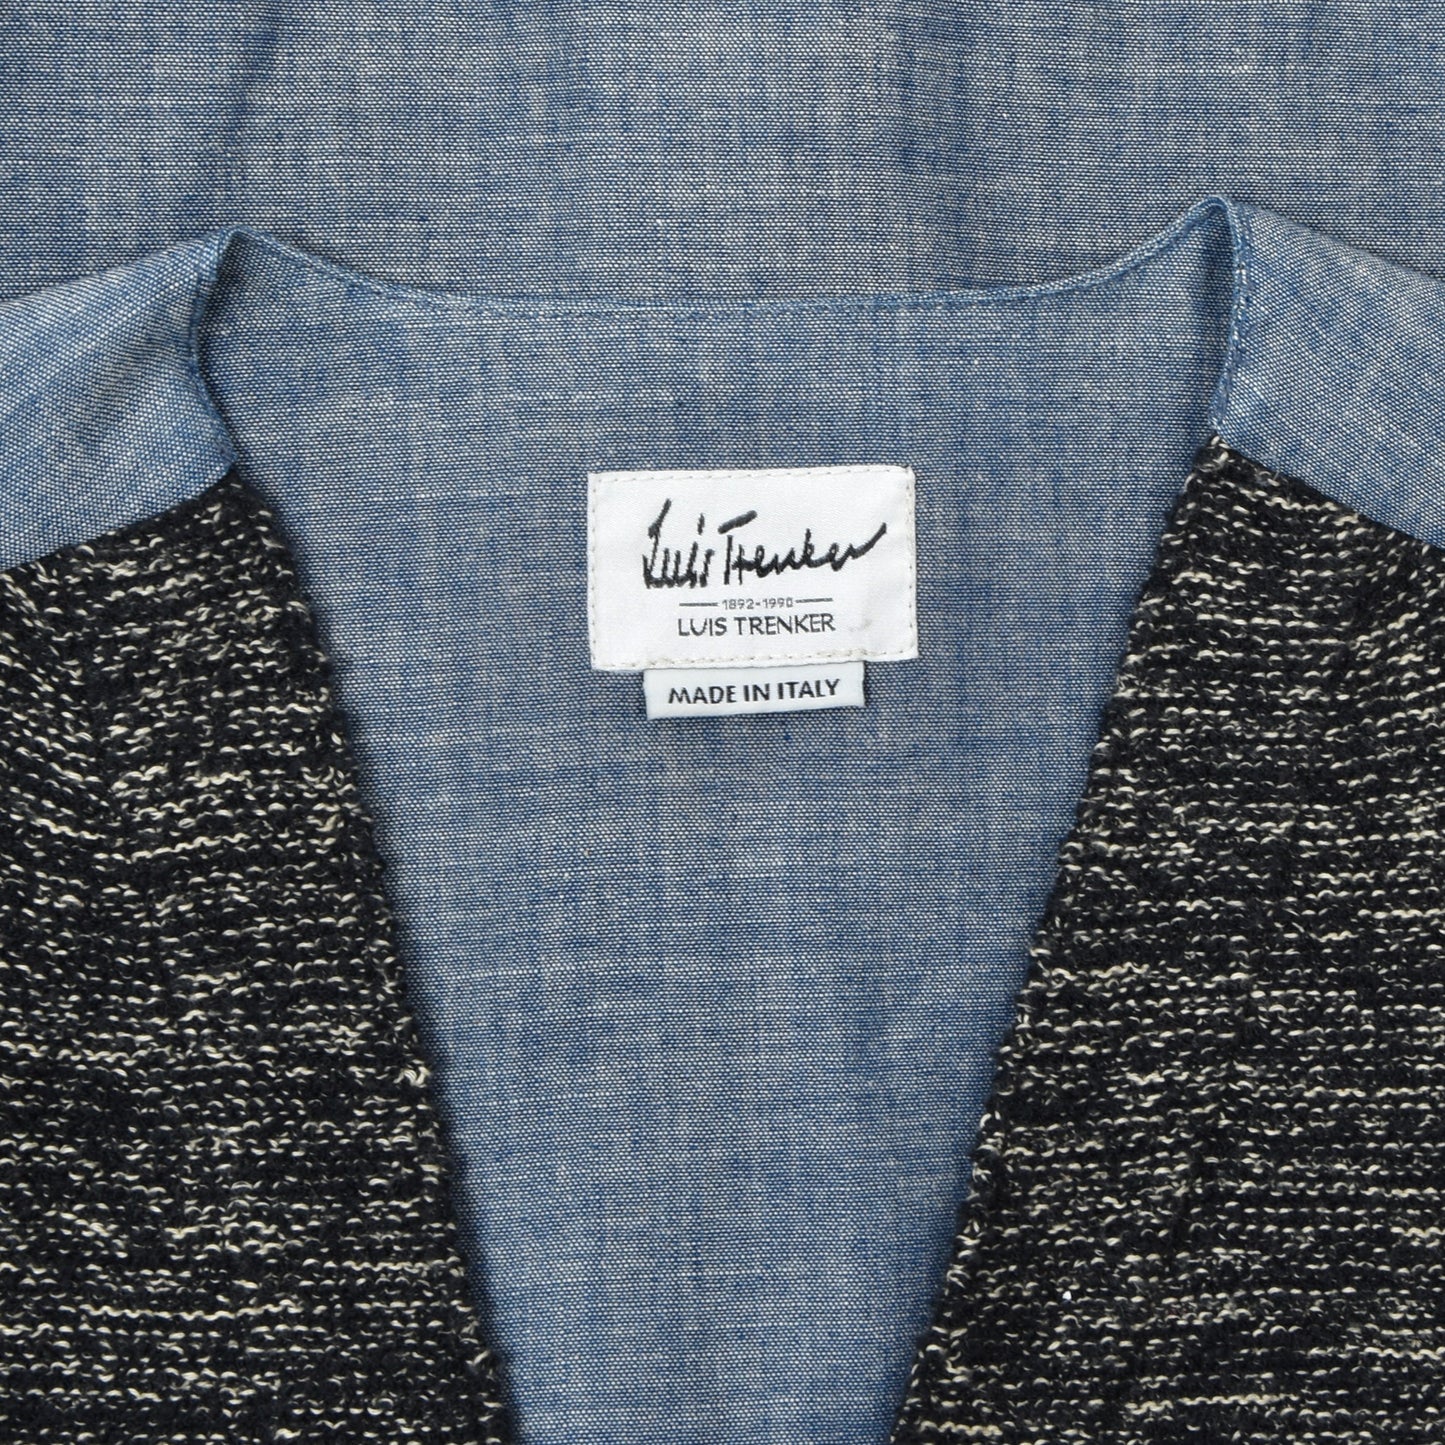 Luis Trenker Cotton-Blend Waistcoat/Vest Size S